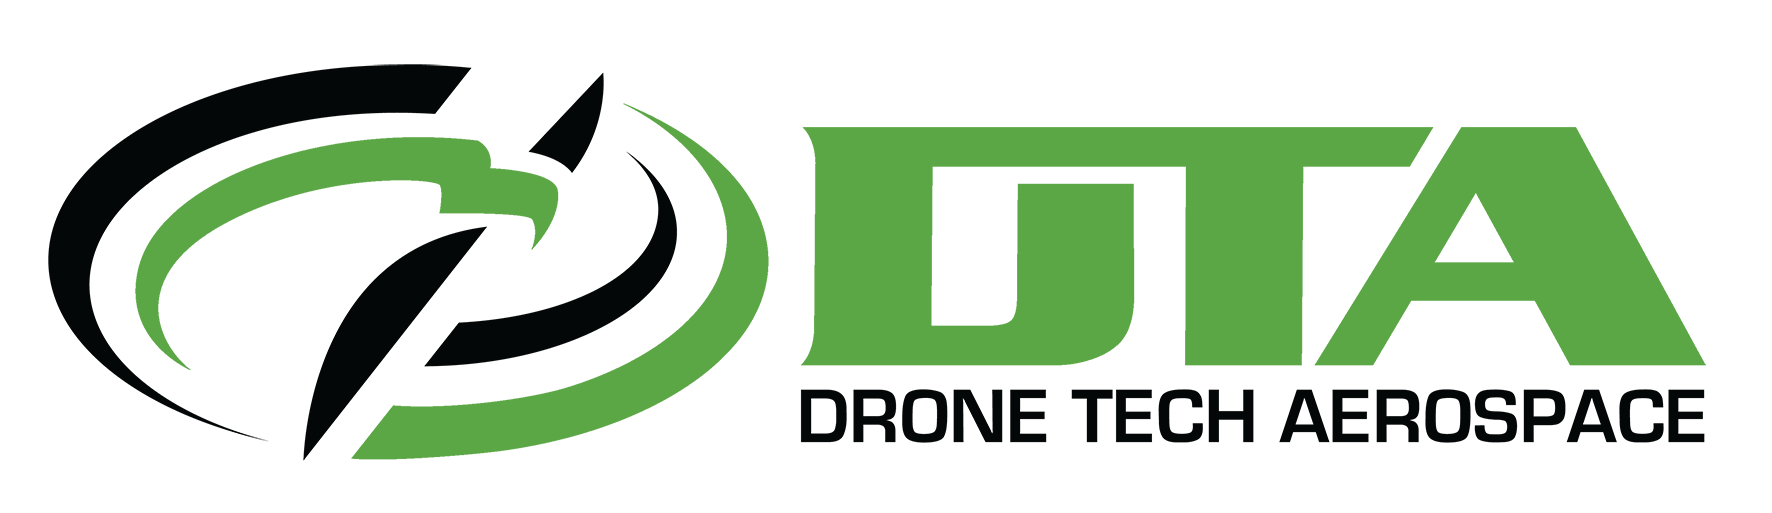 DTA Drone Land Surveying Service